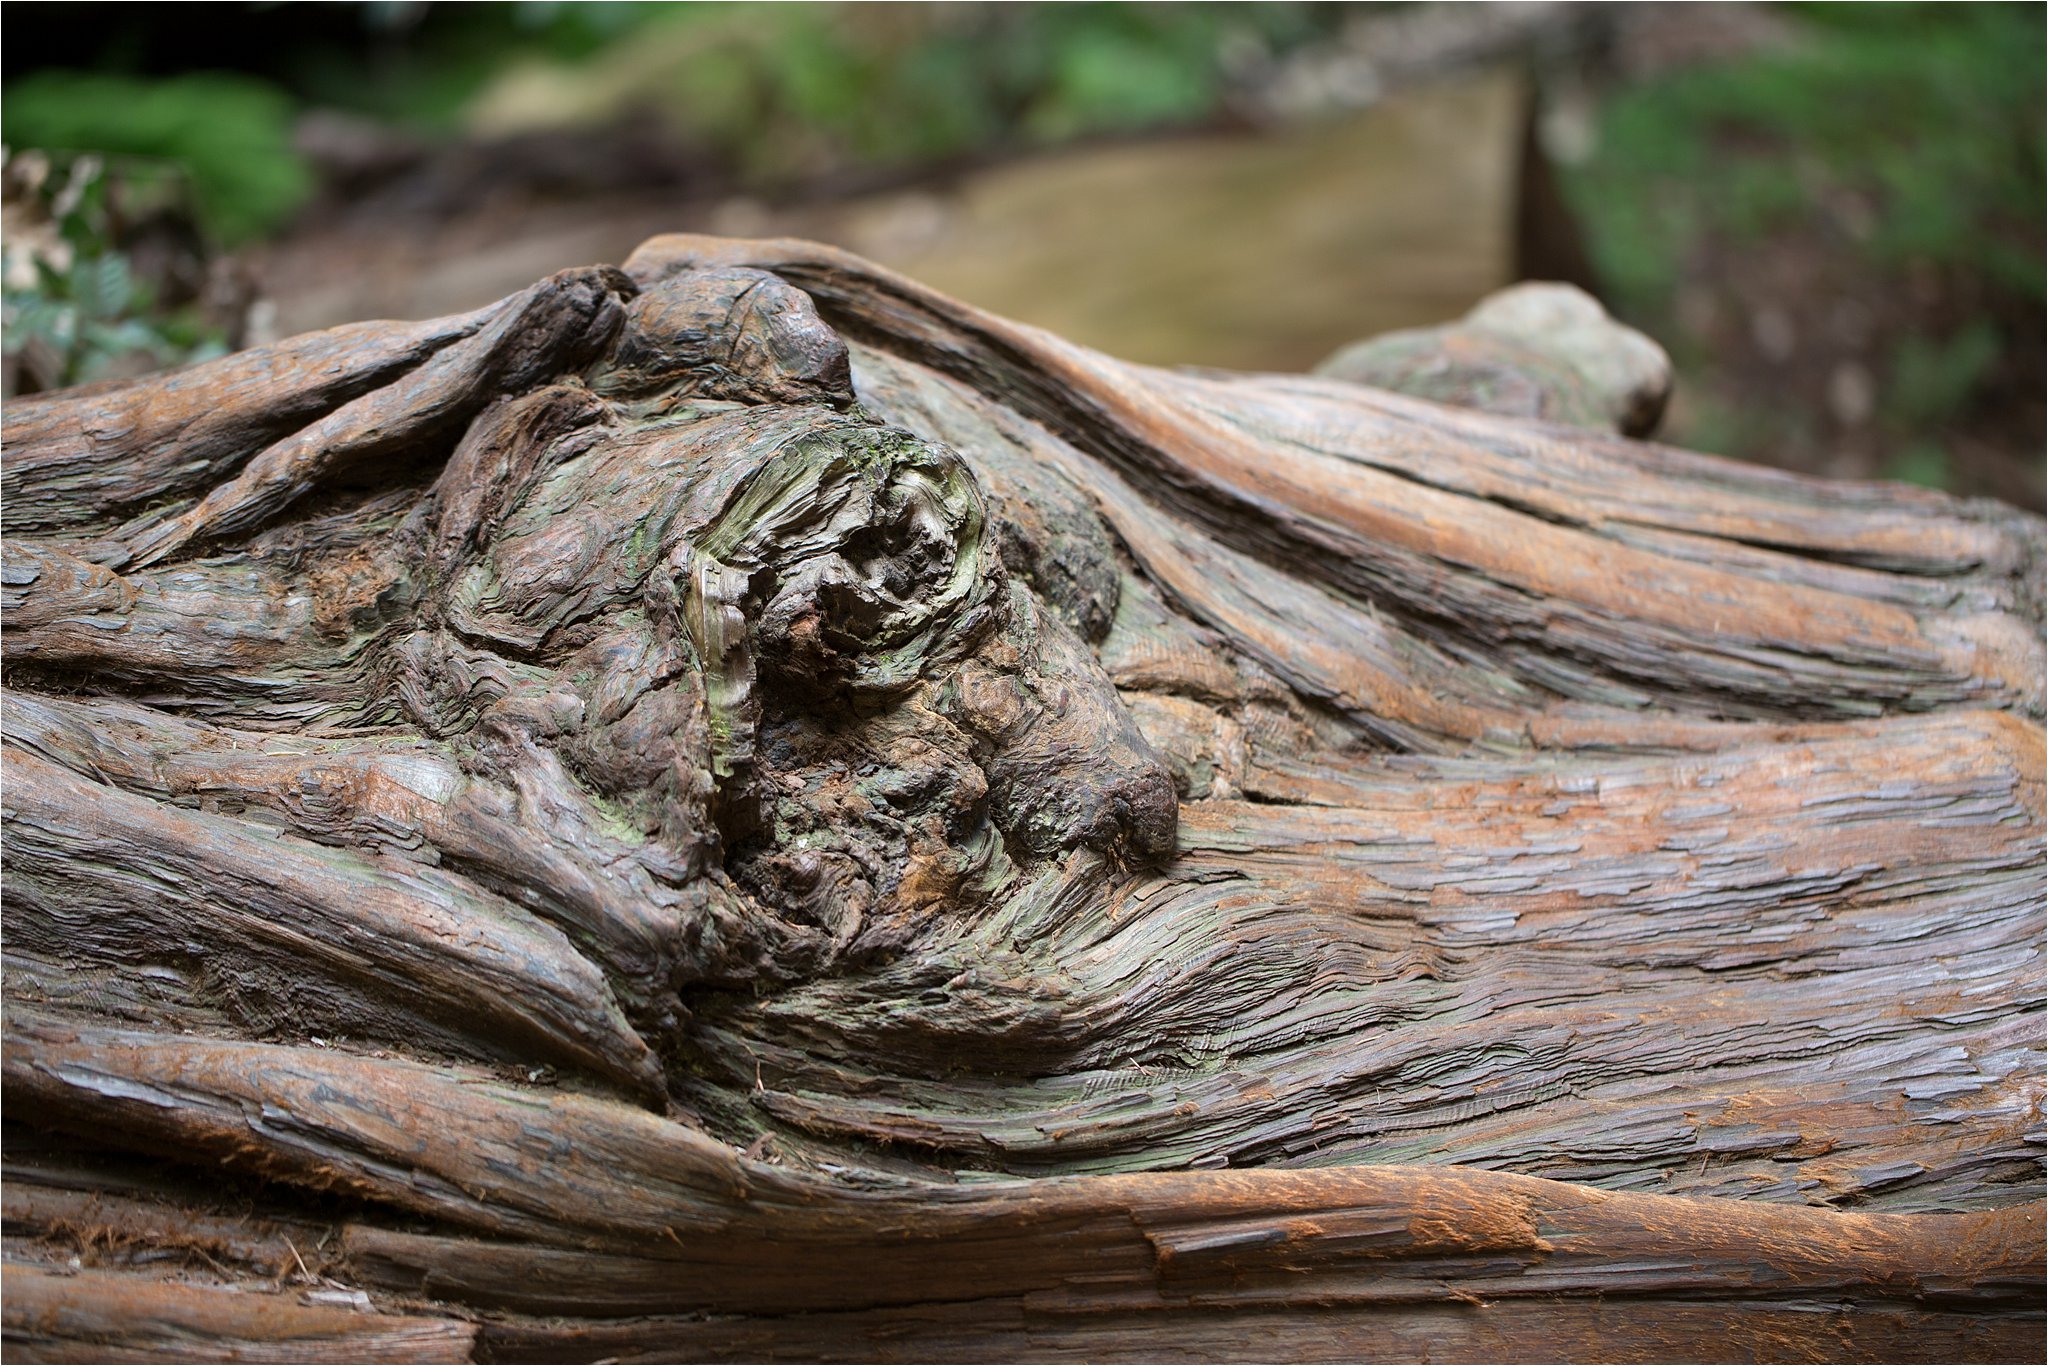 Fallen Redwood Tree